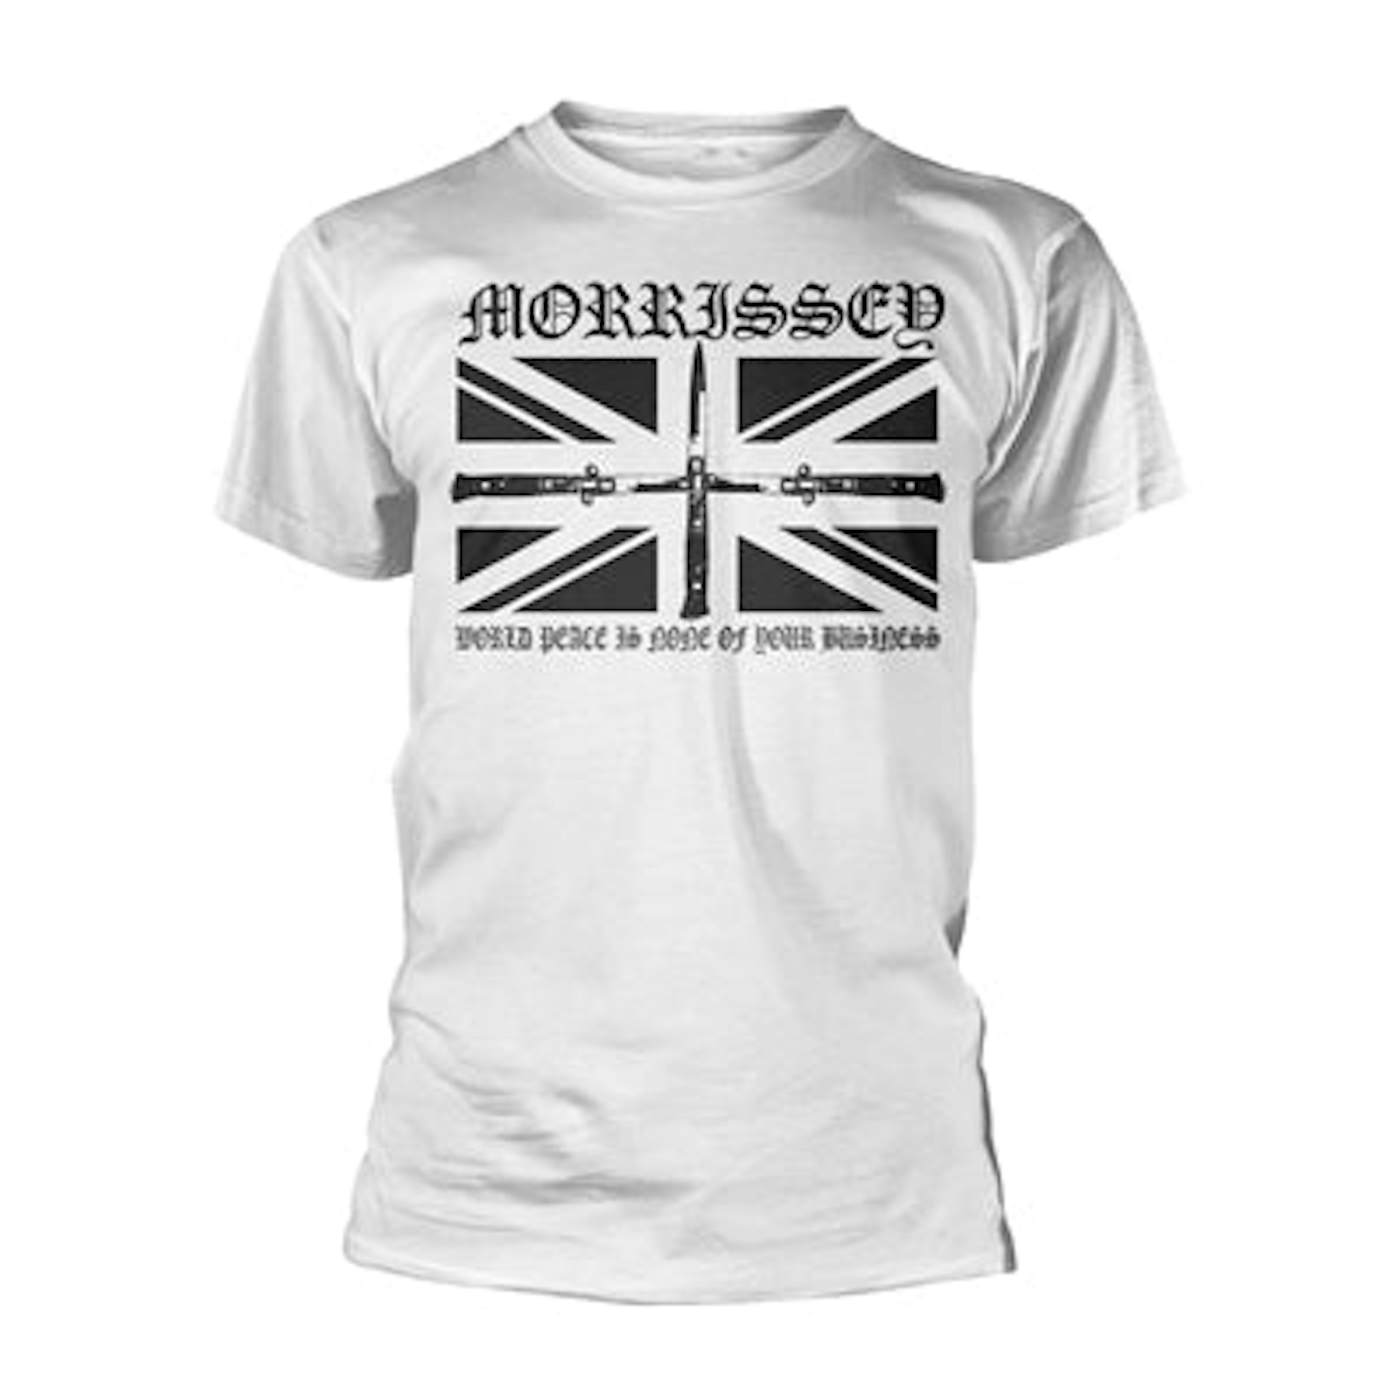 Morrissey T-Shirt - Flick Knife